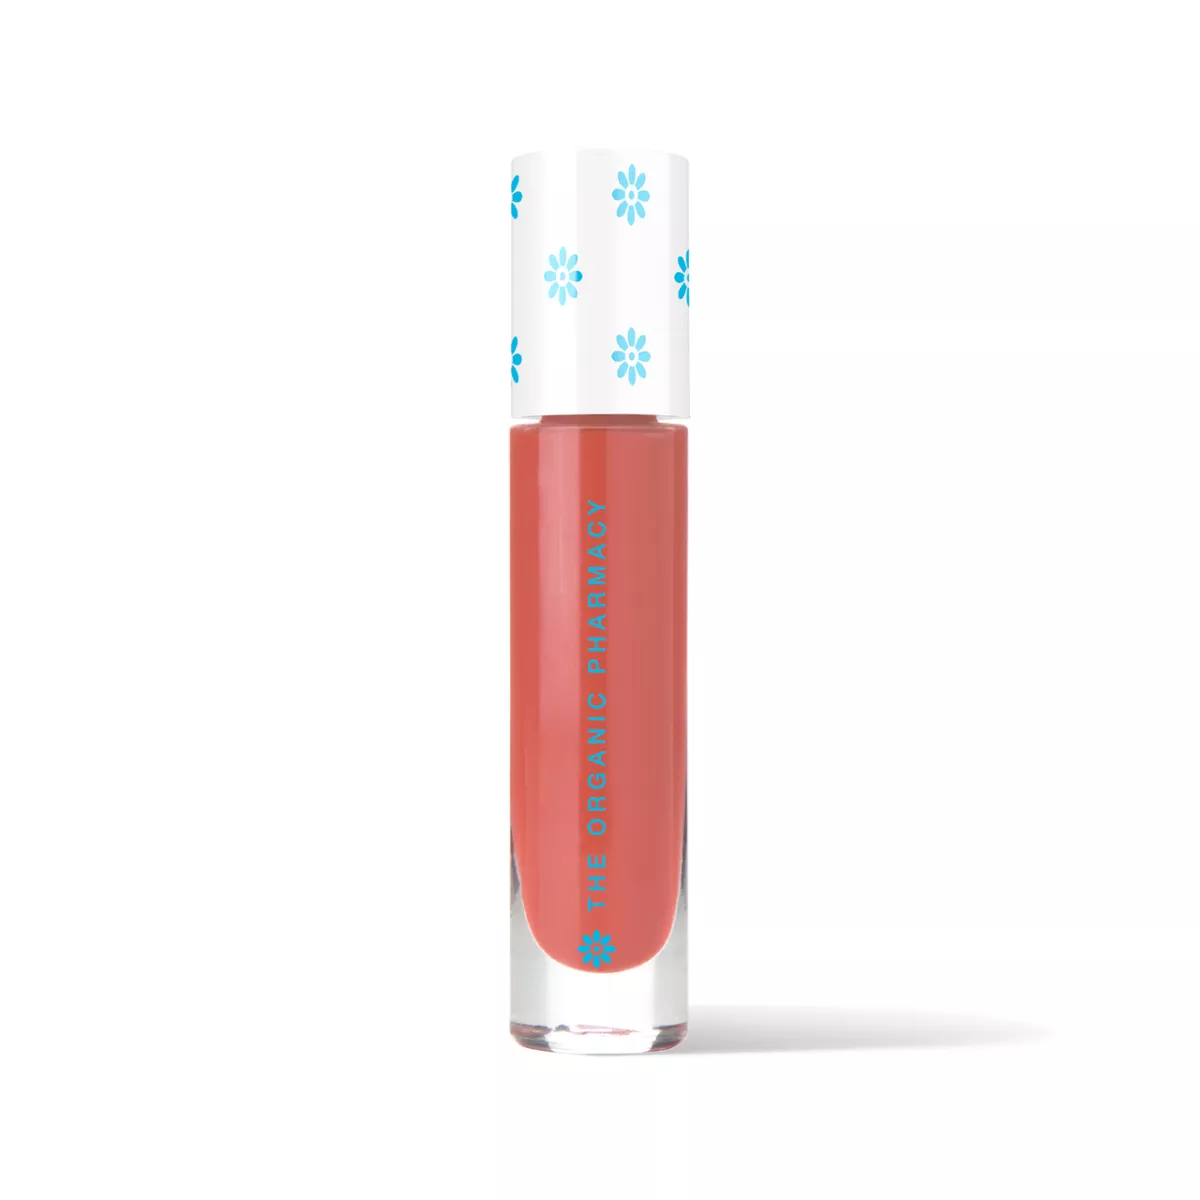 #1 - The Organic Pharmacy  -  Plumping Liquid Lipstick 5 ml Red